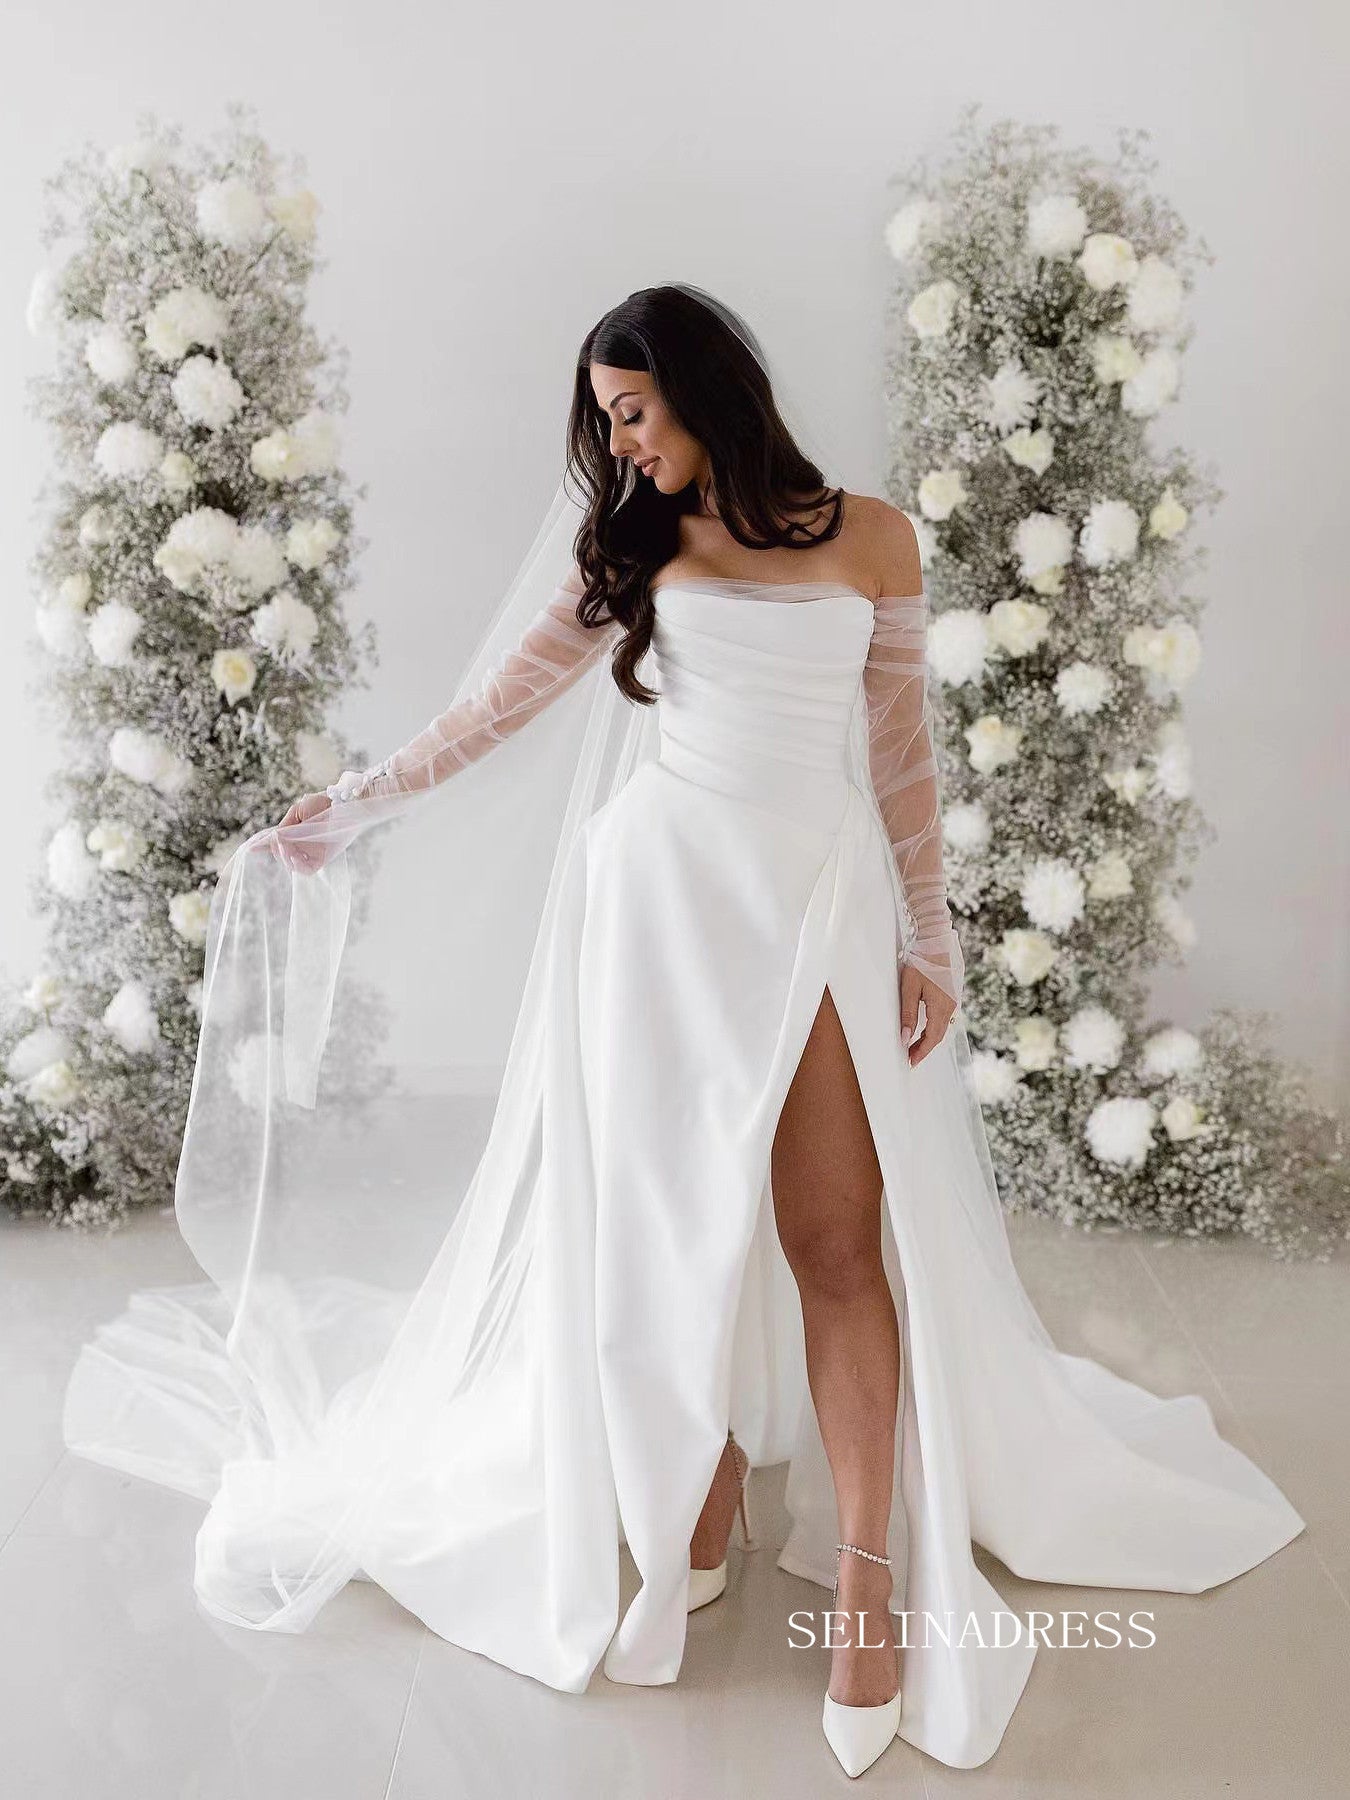 Long Sleeve Wedding Dresses & Bridal Gowns